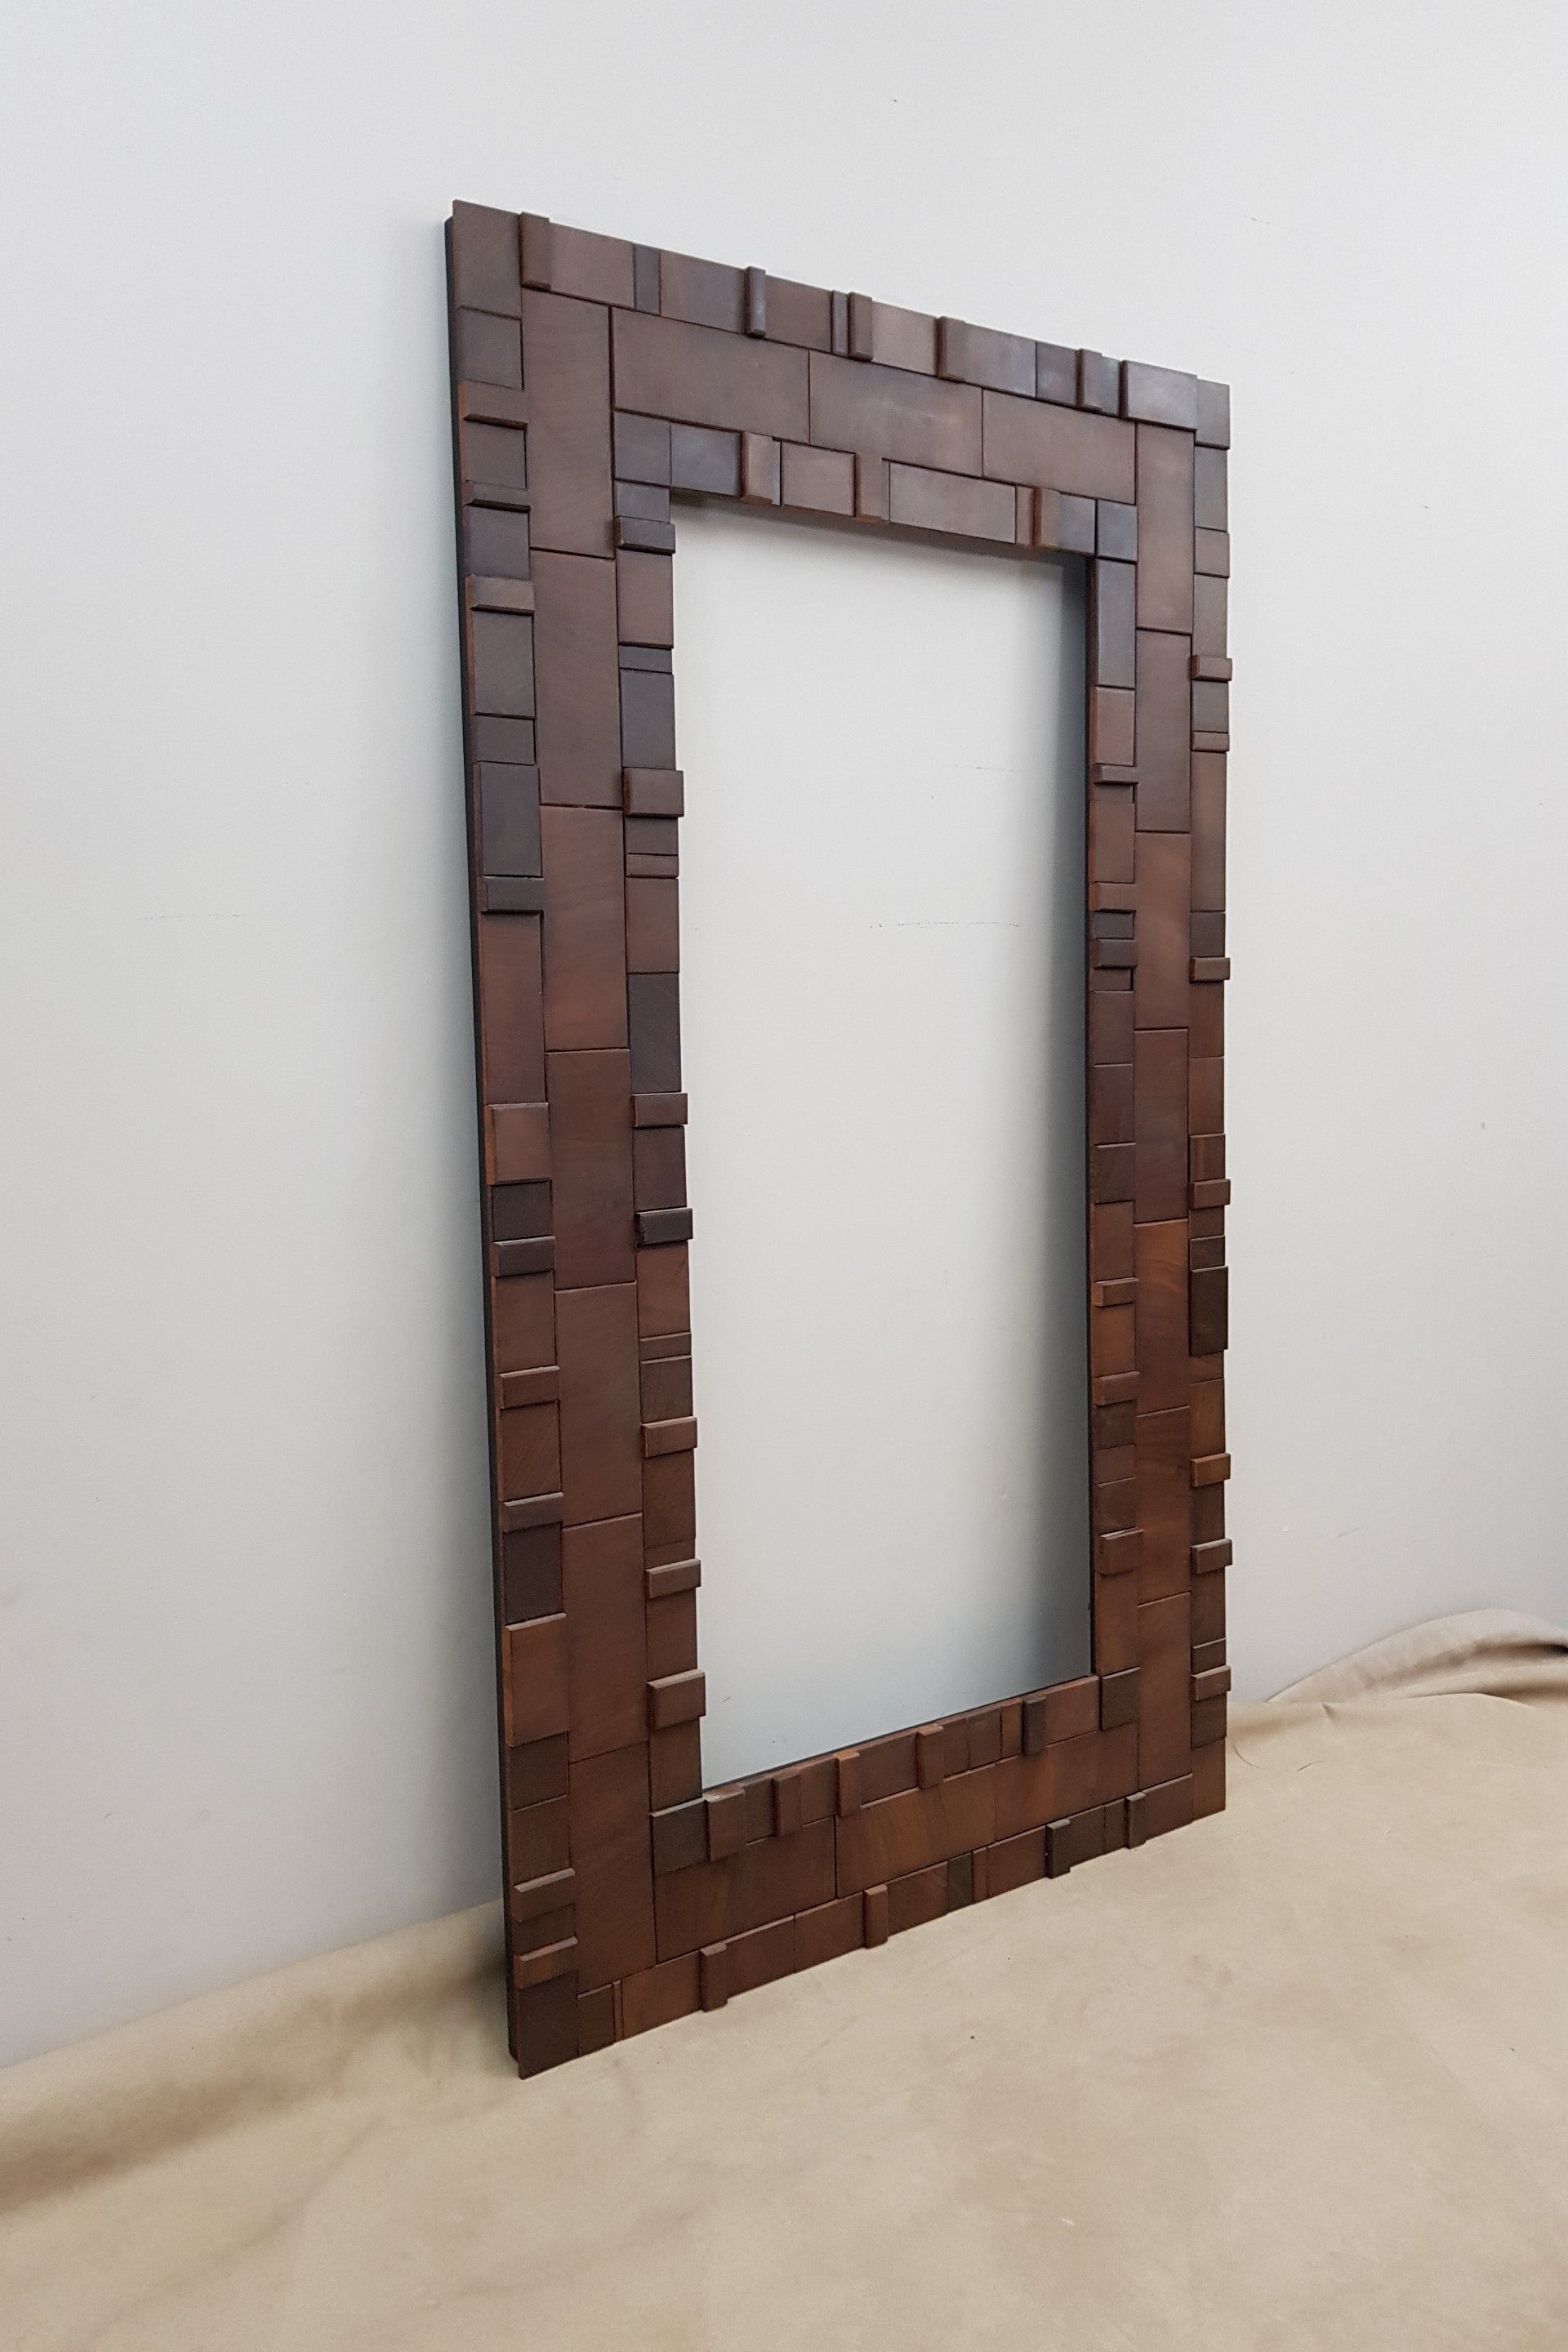 statement mirror frame in end grain mahogany